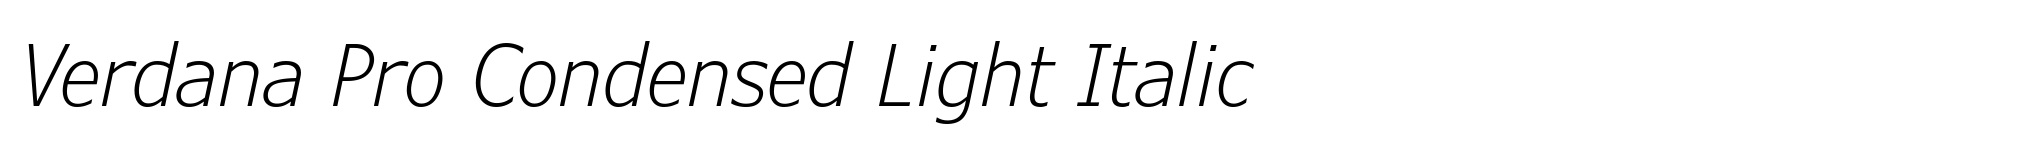 Verdana Pro Condensed Light Italic image